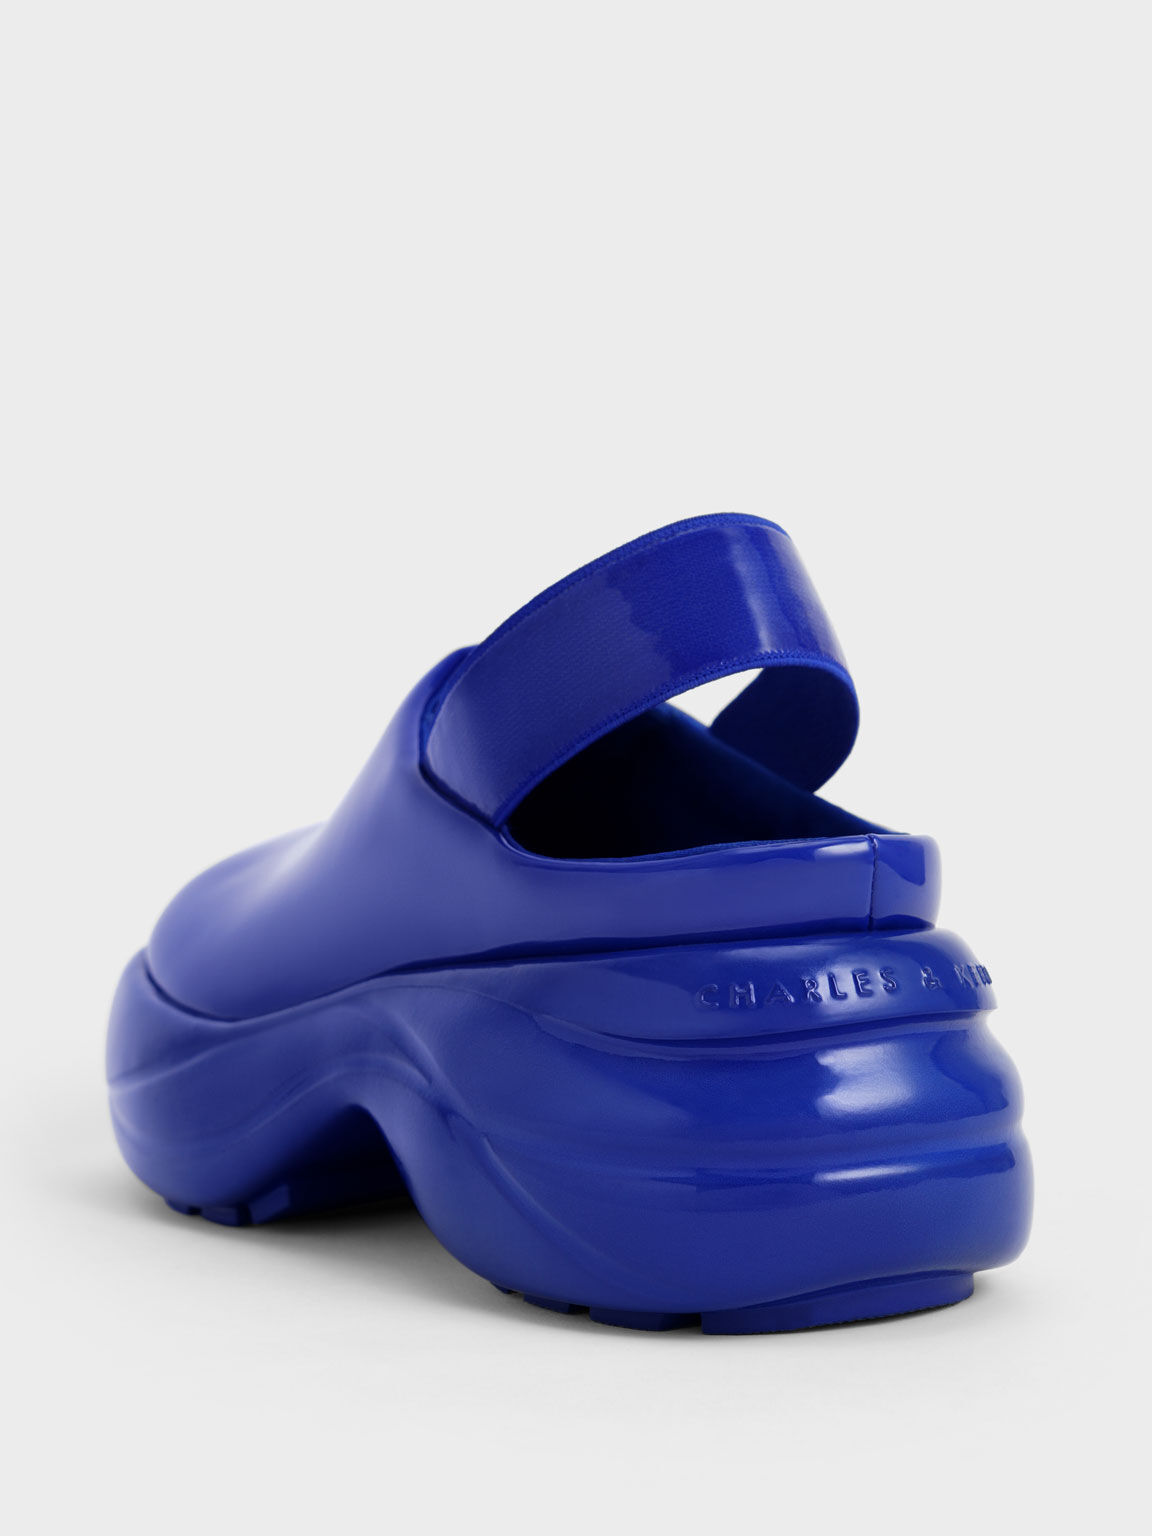 Roony 漆皮厚底懶人鞋, 藍色, hi-res